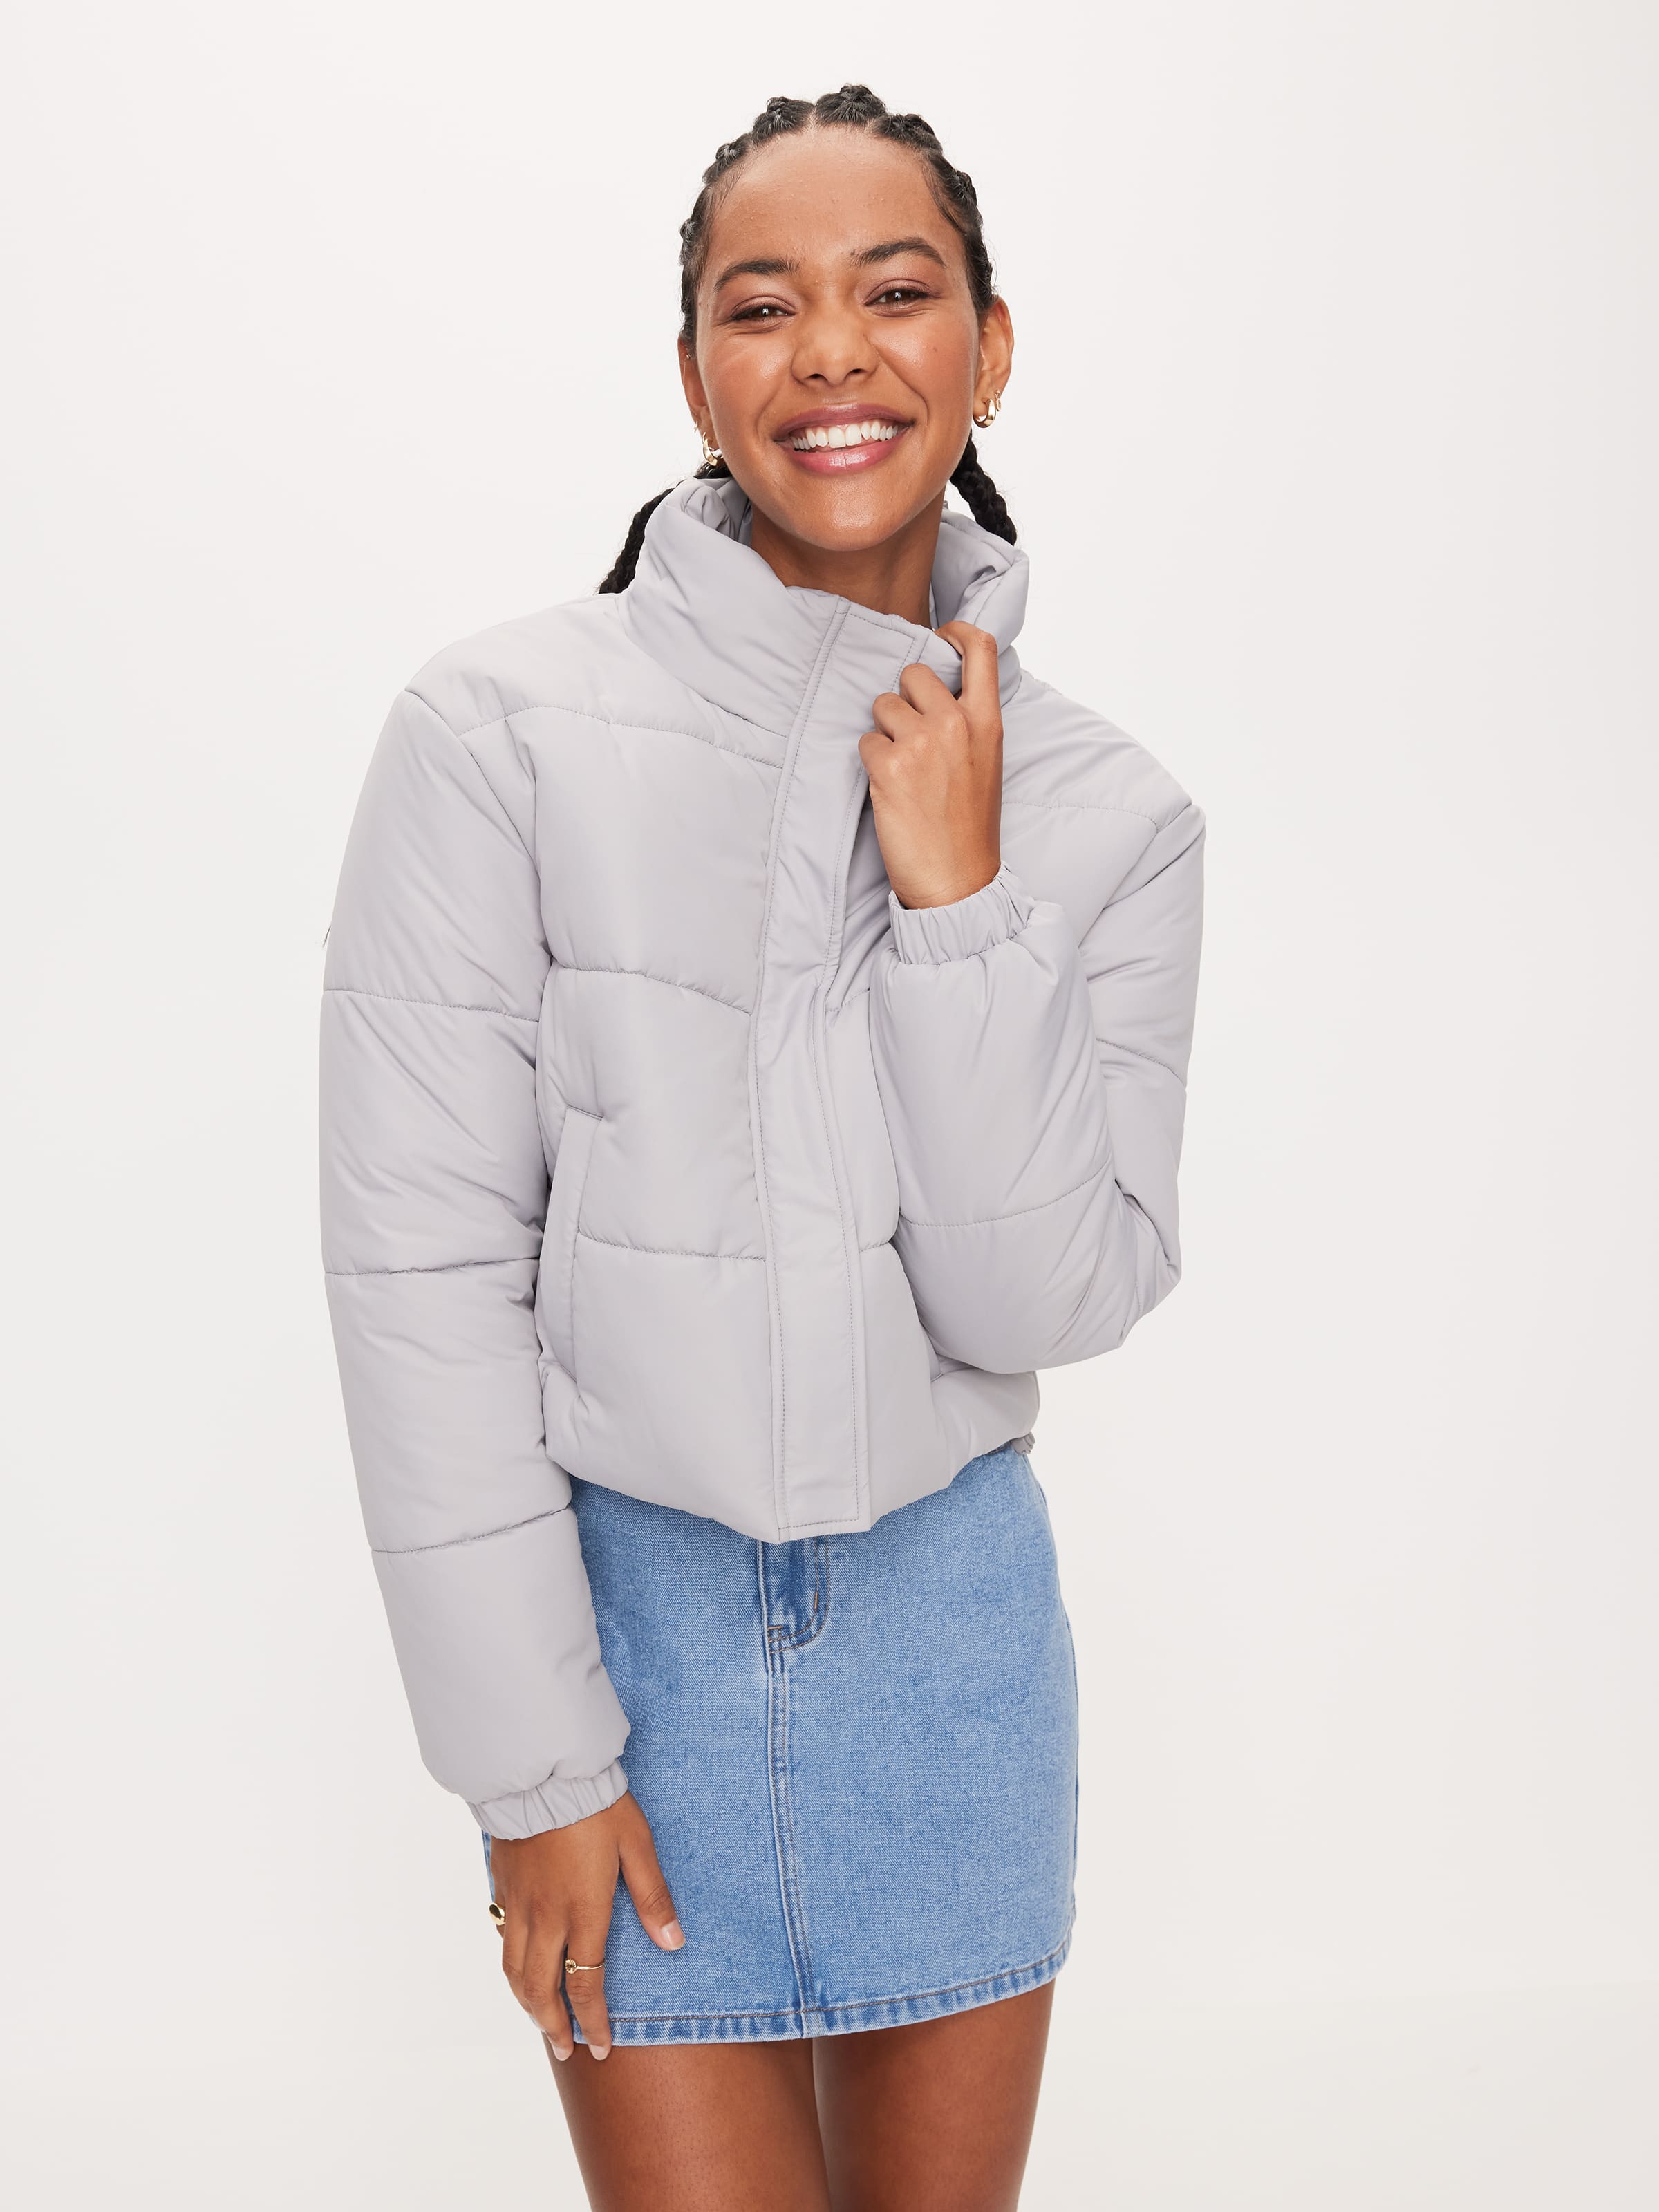 Jackets for Women- Denim Jackets, Blazers & More